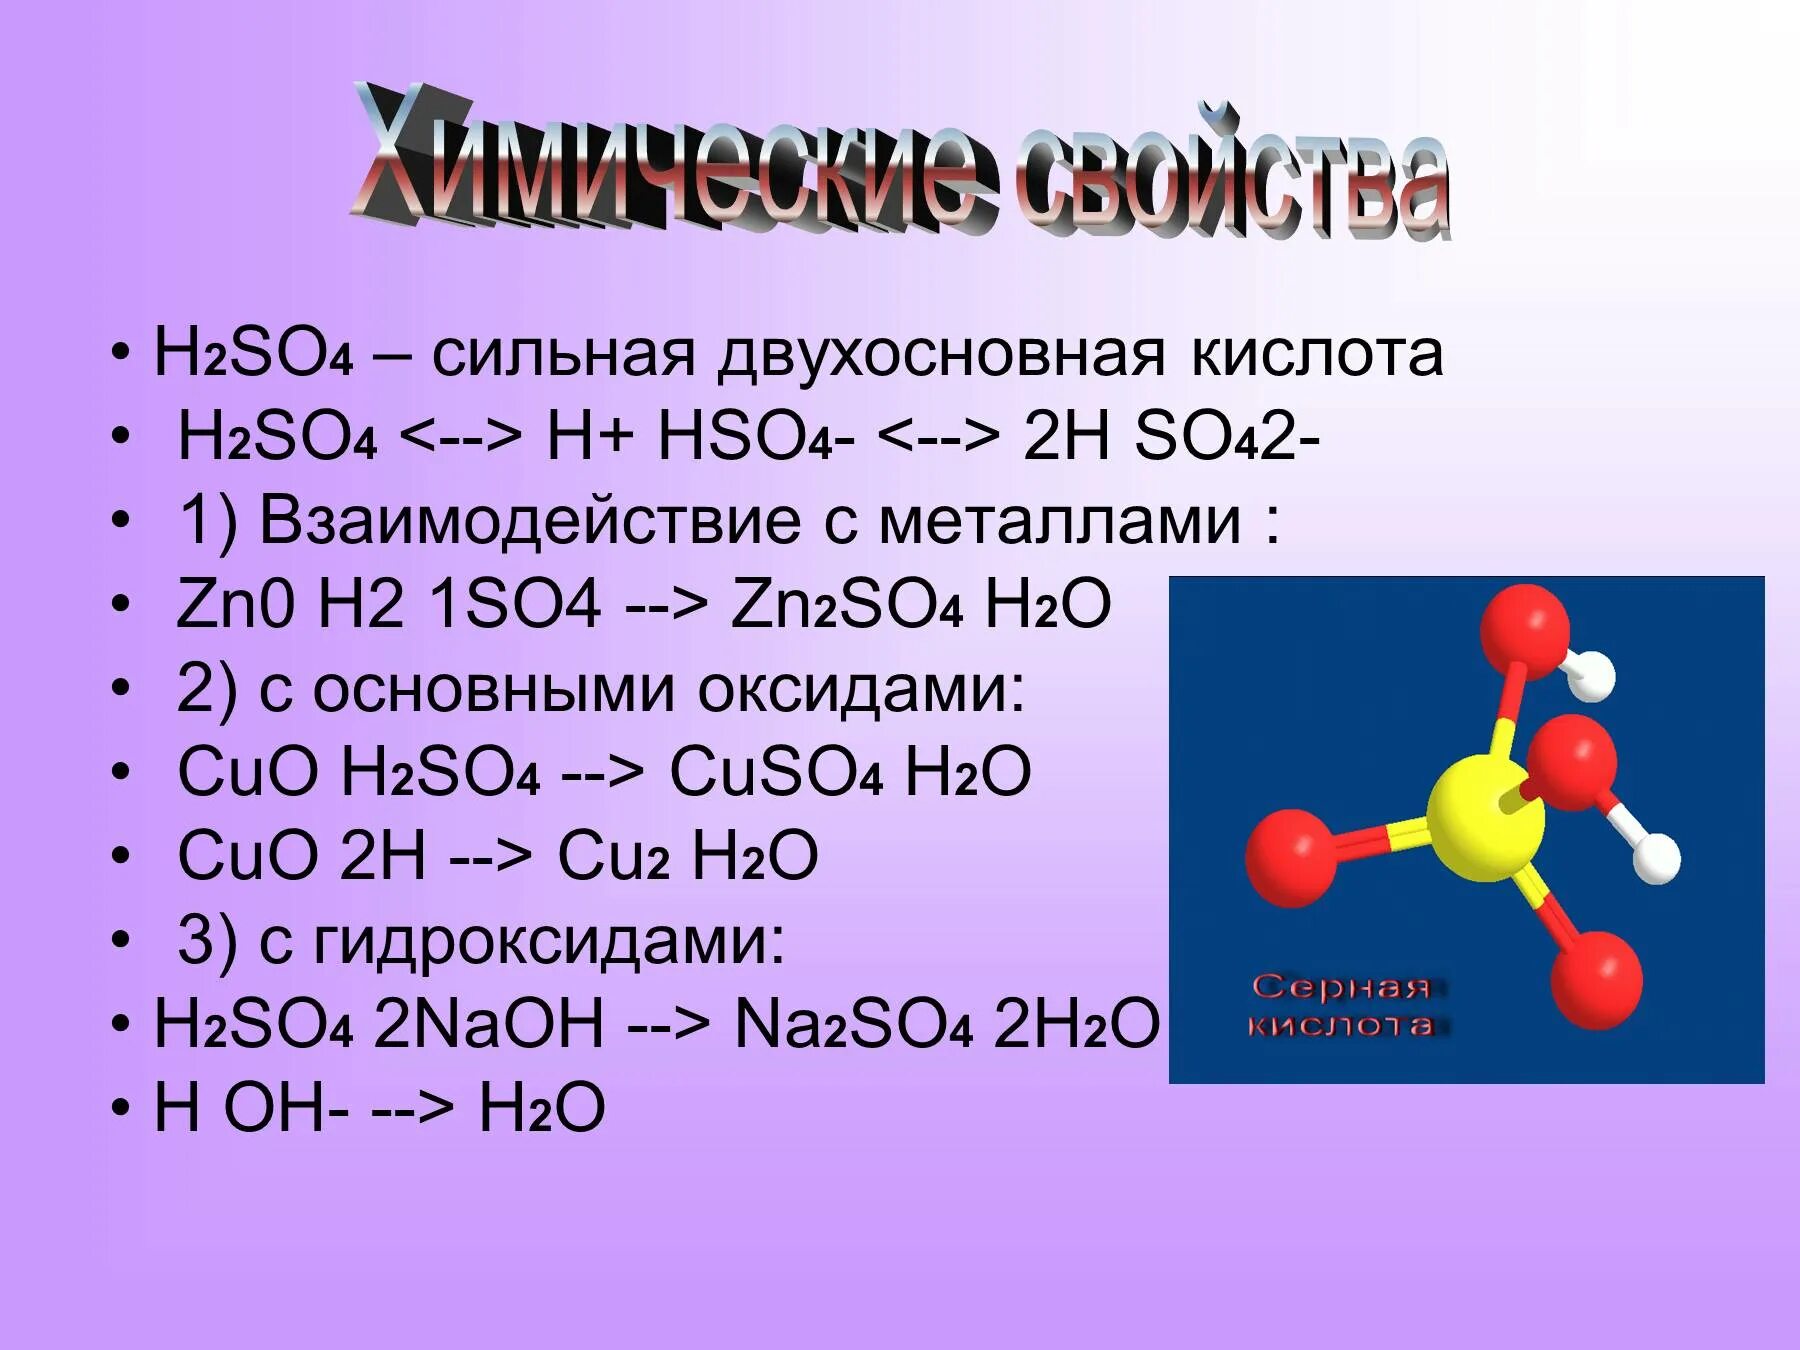 Формула серной кислоты h2so4. Химическая формула серной кислоты h2so4. H2ro4. H2po4 двухосновнаая кислота. C zn o2 h2so4